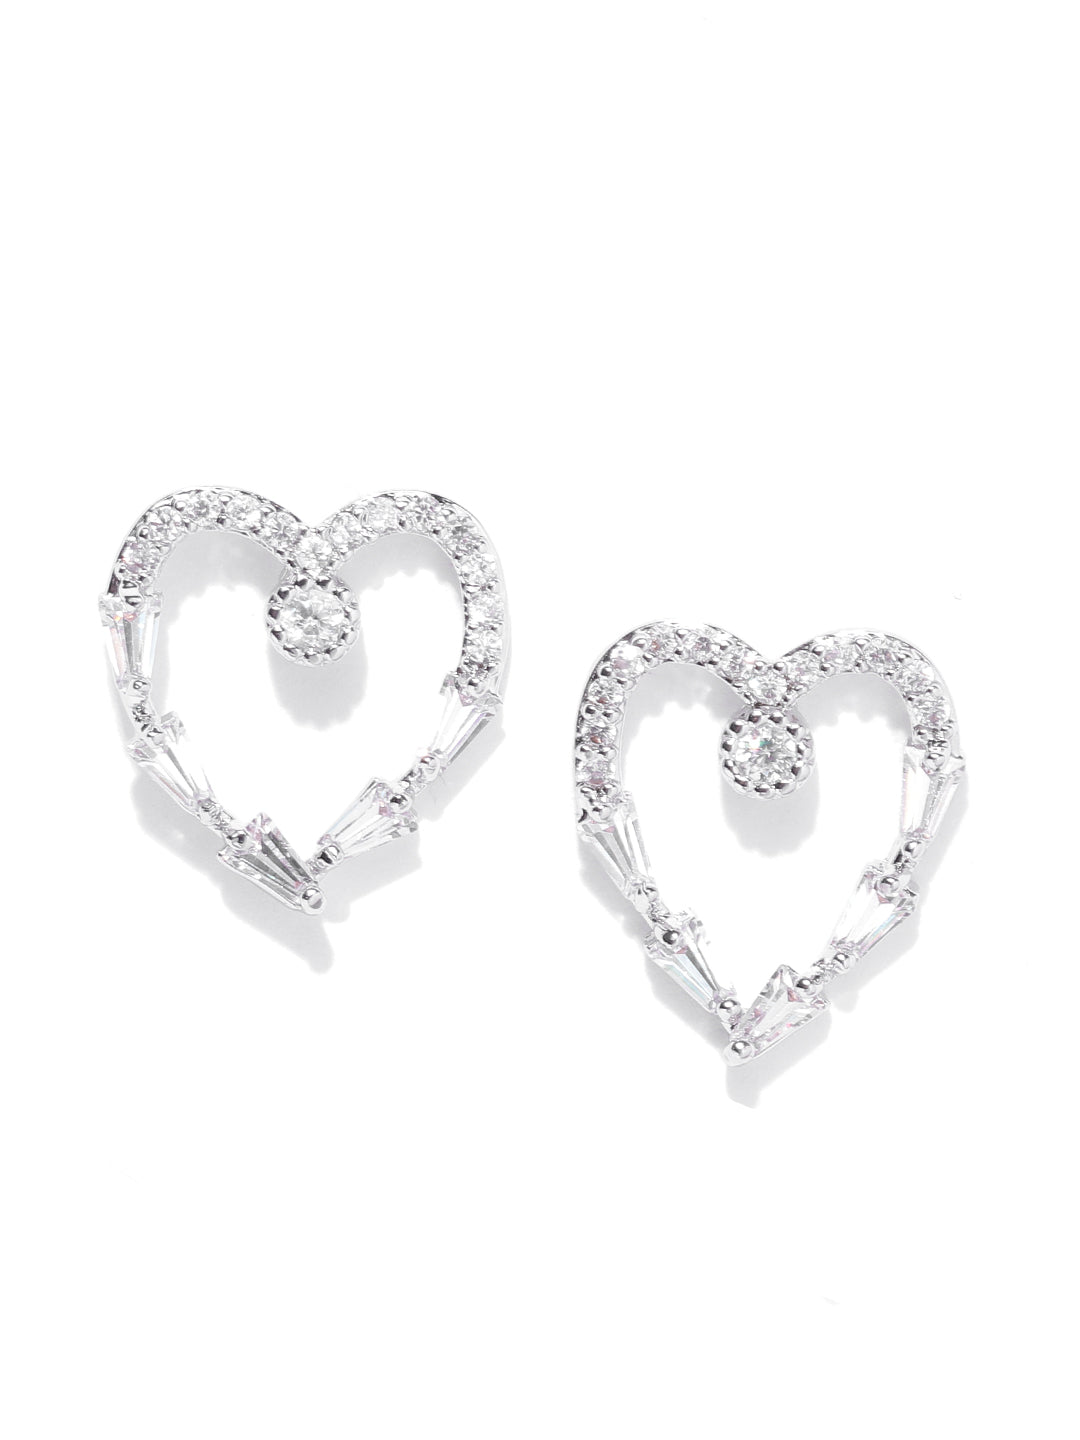 Fashion Jewellery Valentine Special Earrings For Girls/Women